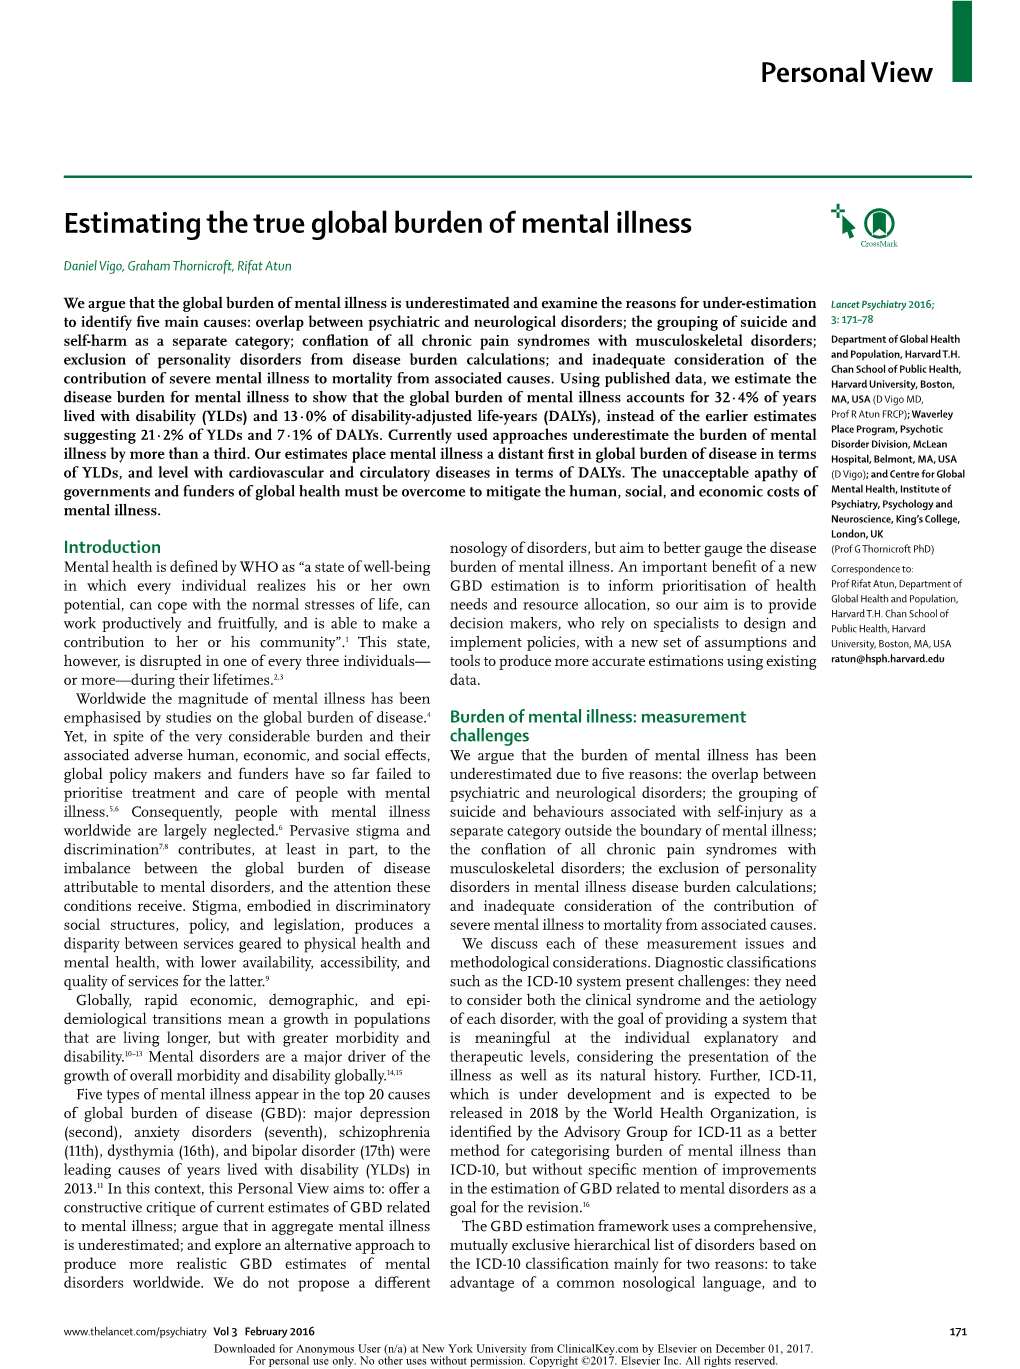 Estimating the True Global Burden of Mental Illness